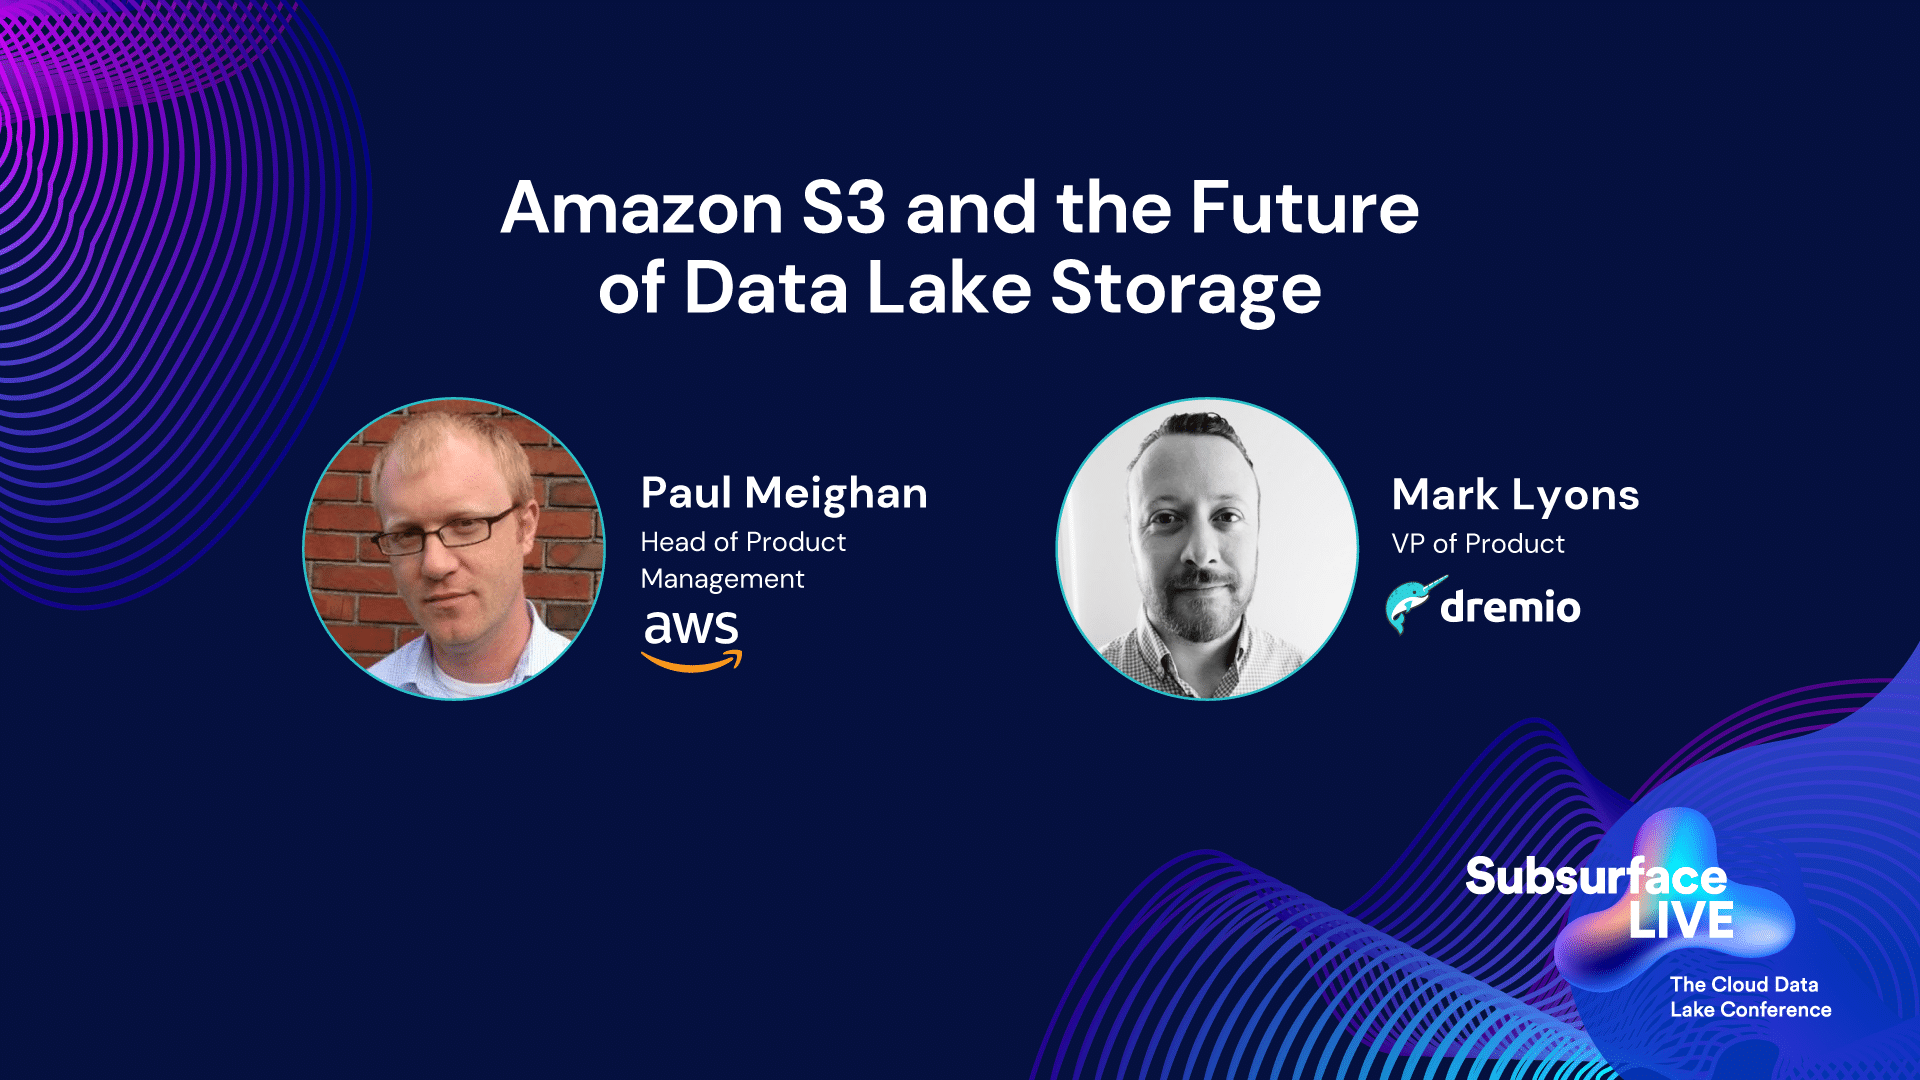 Amazon S3 and the Future of Data Lake Storage